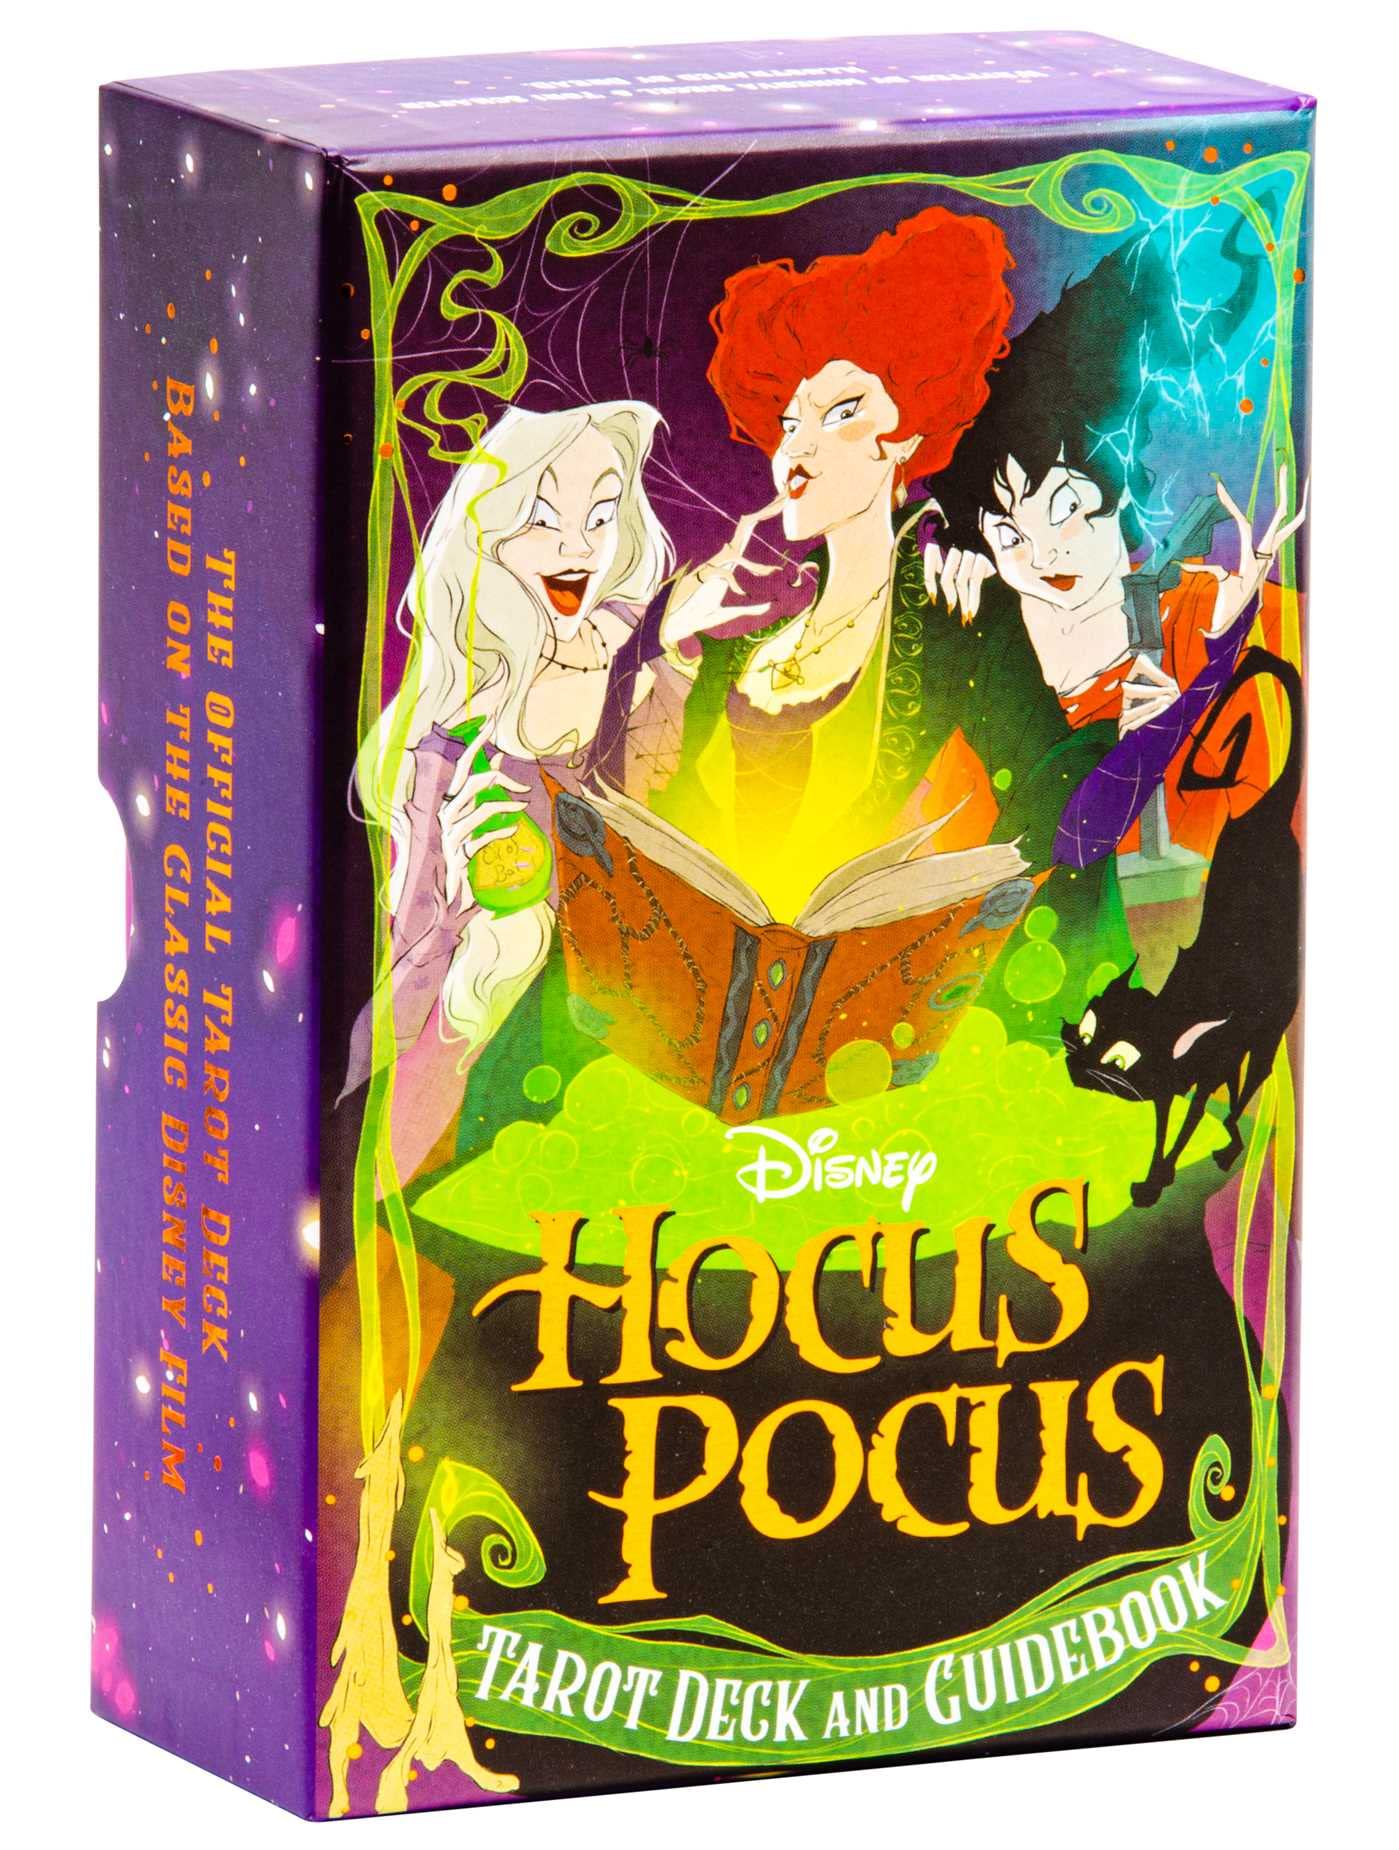 Hocus Pocus: The Official Tarot Deck and Guidebook: (Tarot Cards, Tarot for Beginners, Hocus Pocus Merchandise, Hocus Pocus Book) (Other)